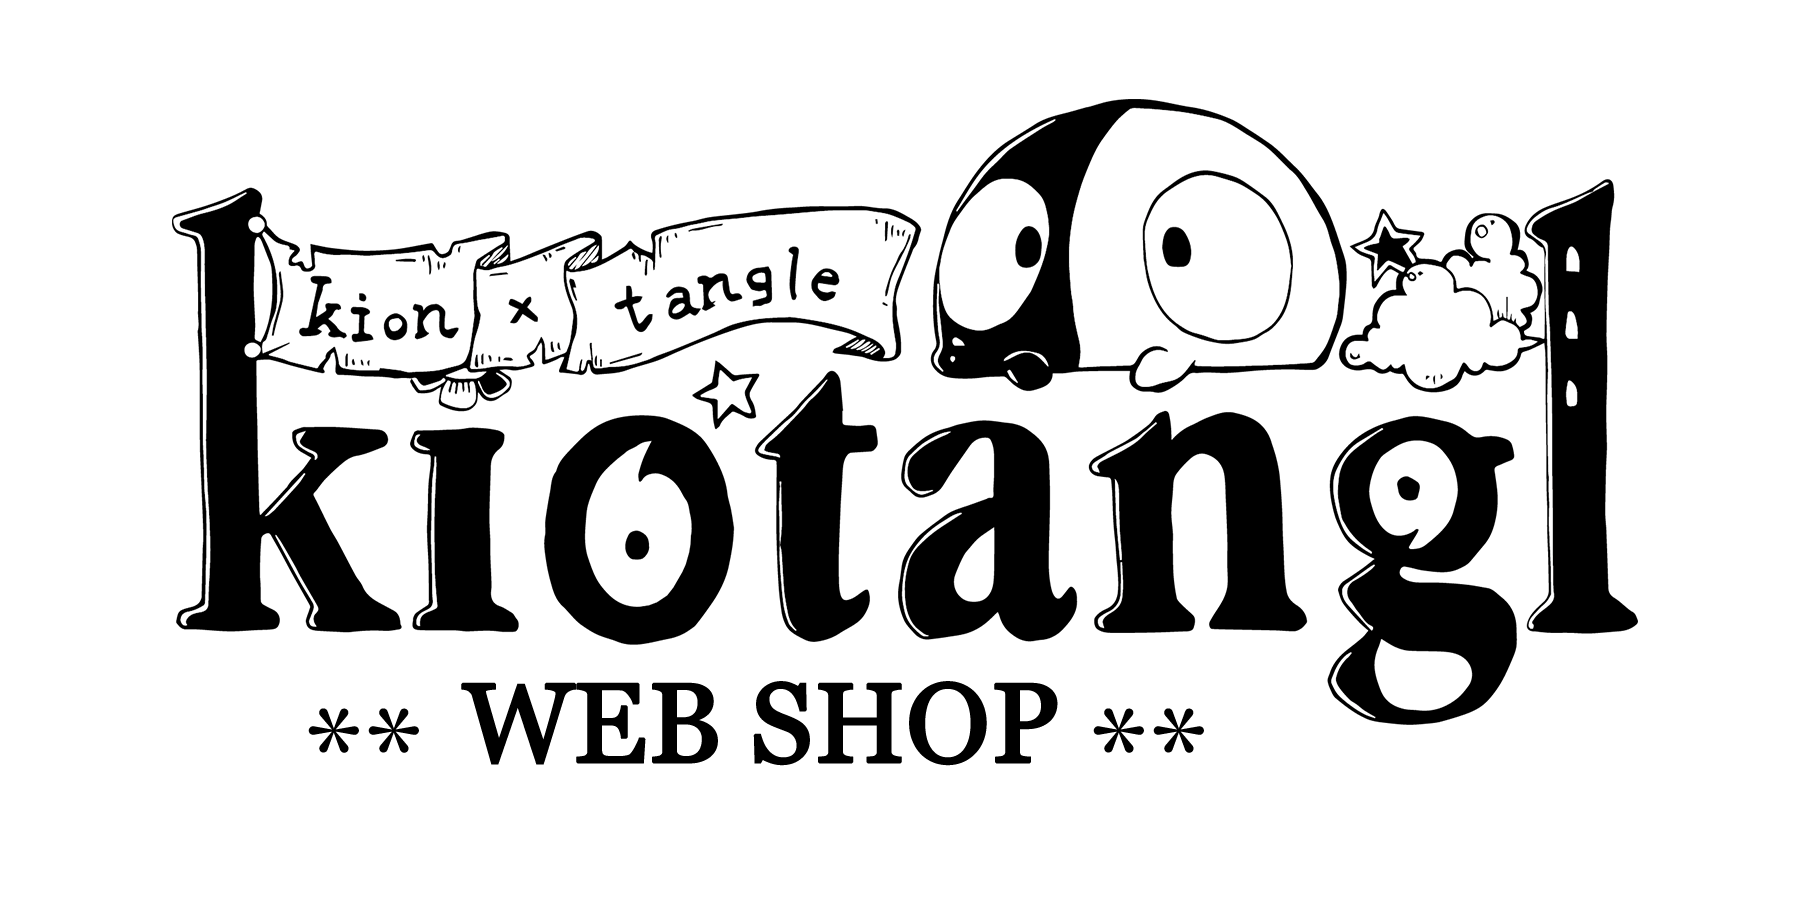 kiotangl web shop ◆ 白黒/モノクロ/モノトーン専門